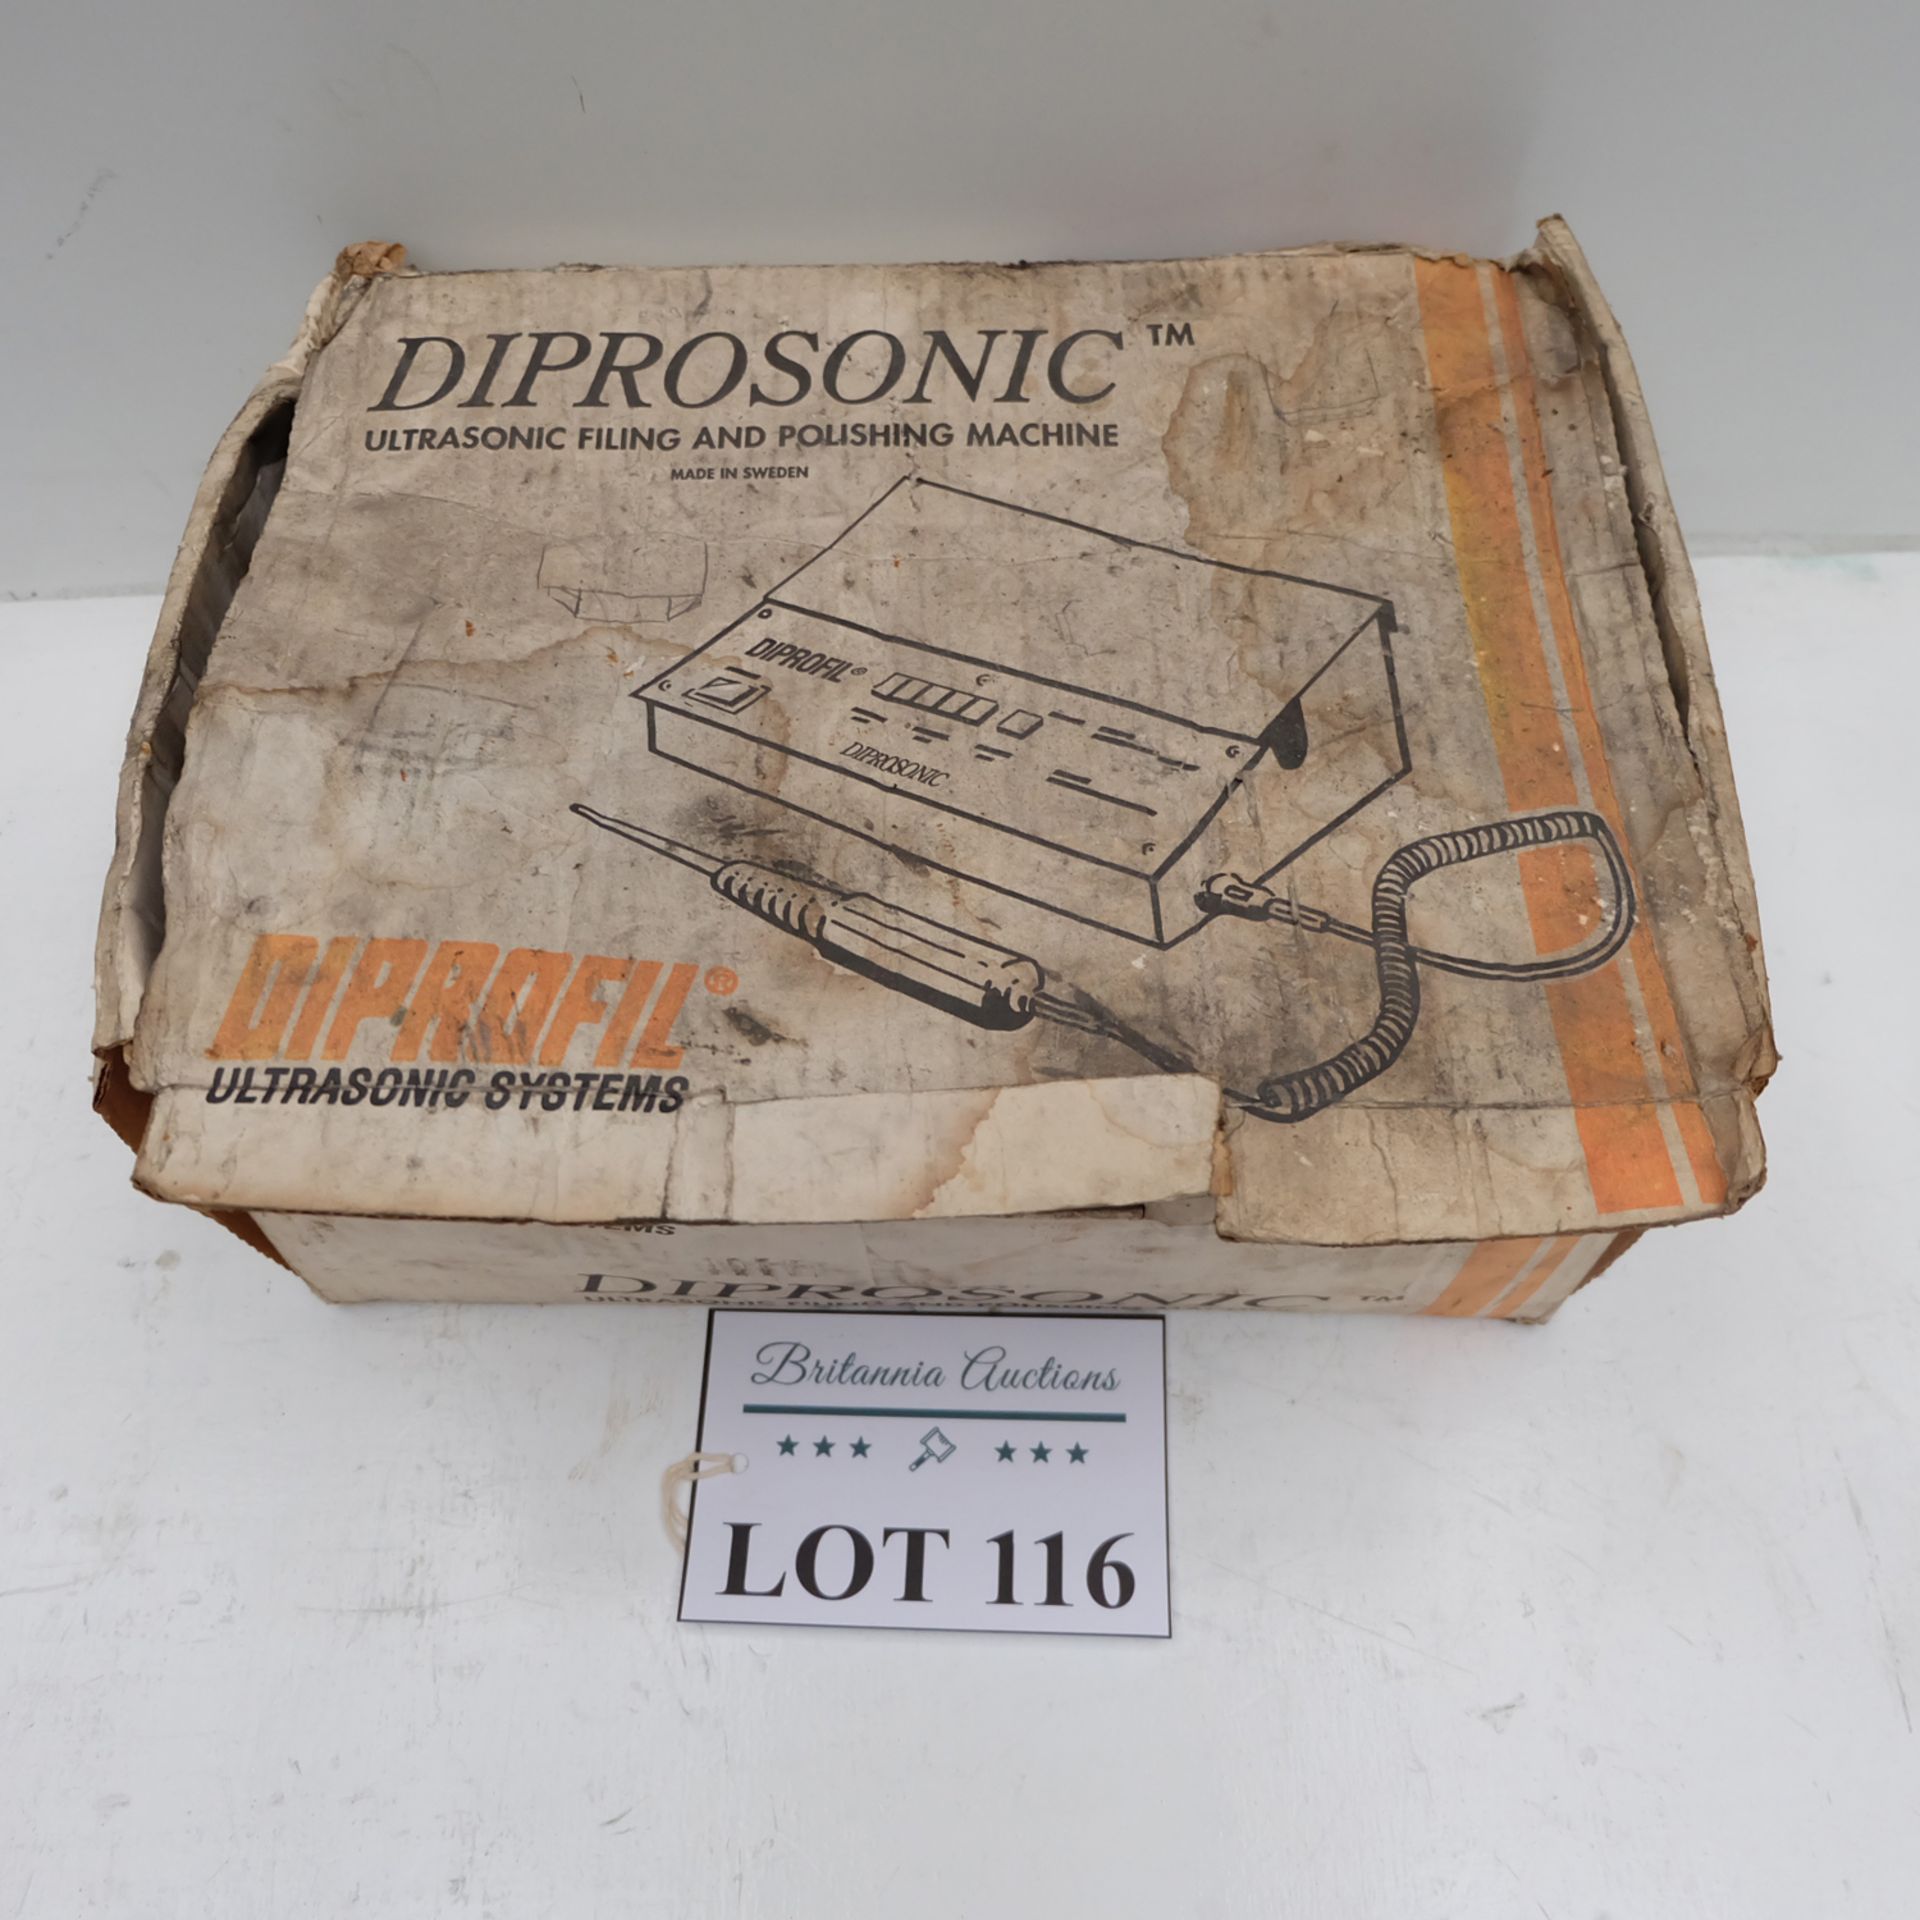 Diprofil Ultrasonic Systems. Ultrasonic Filing & Polishing Machine. Single Phase. - Image 8 of 9